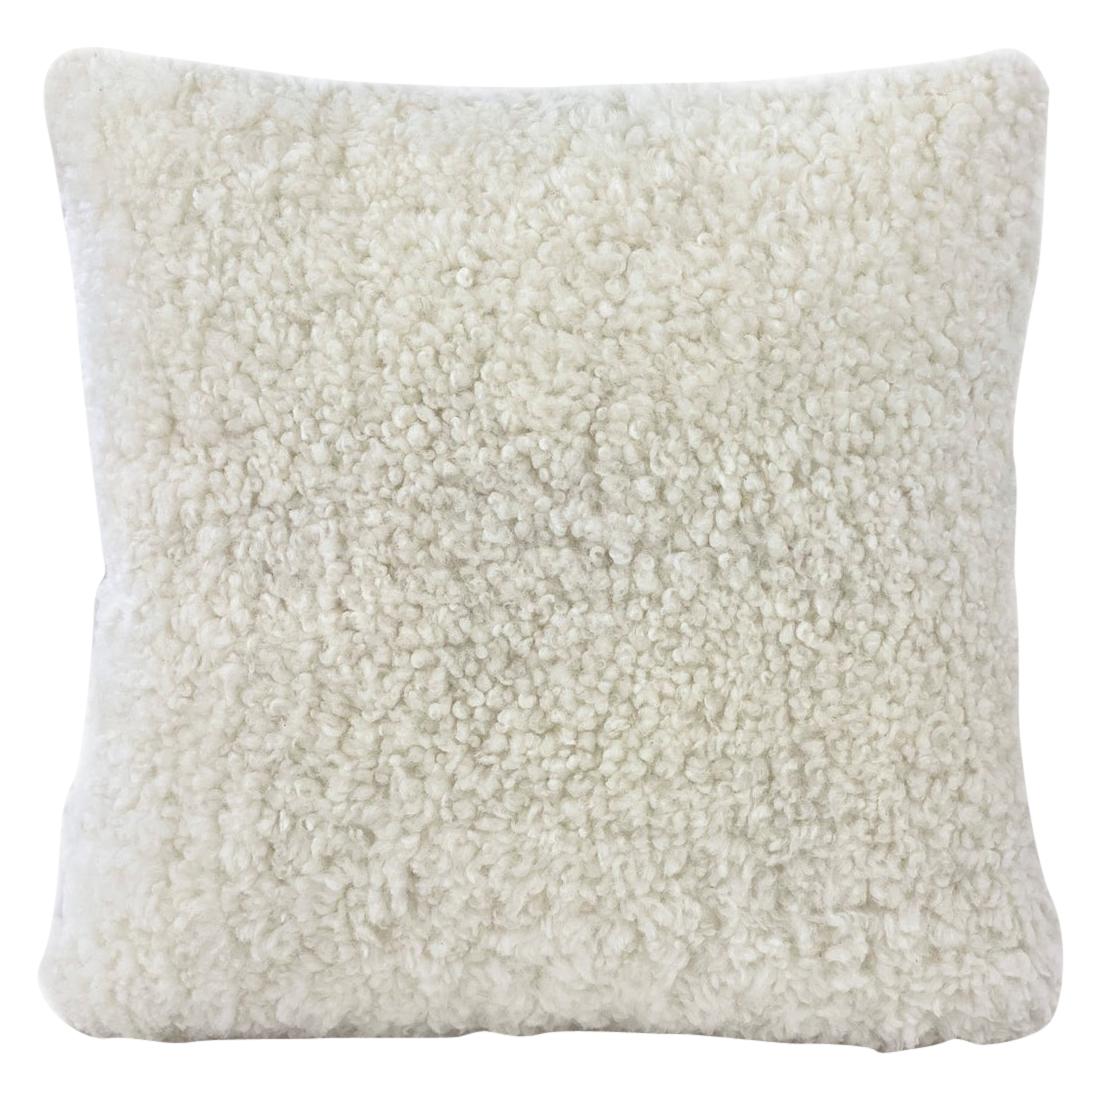 Shearling Sheepskin Pillow, White Square 16x16"  40x40cm